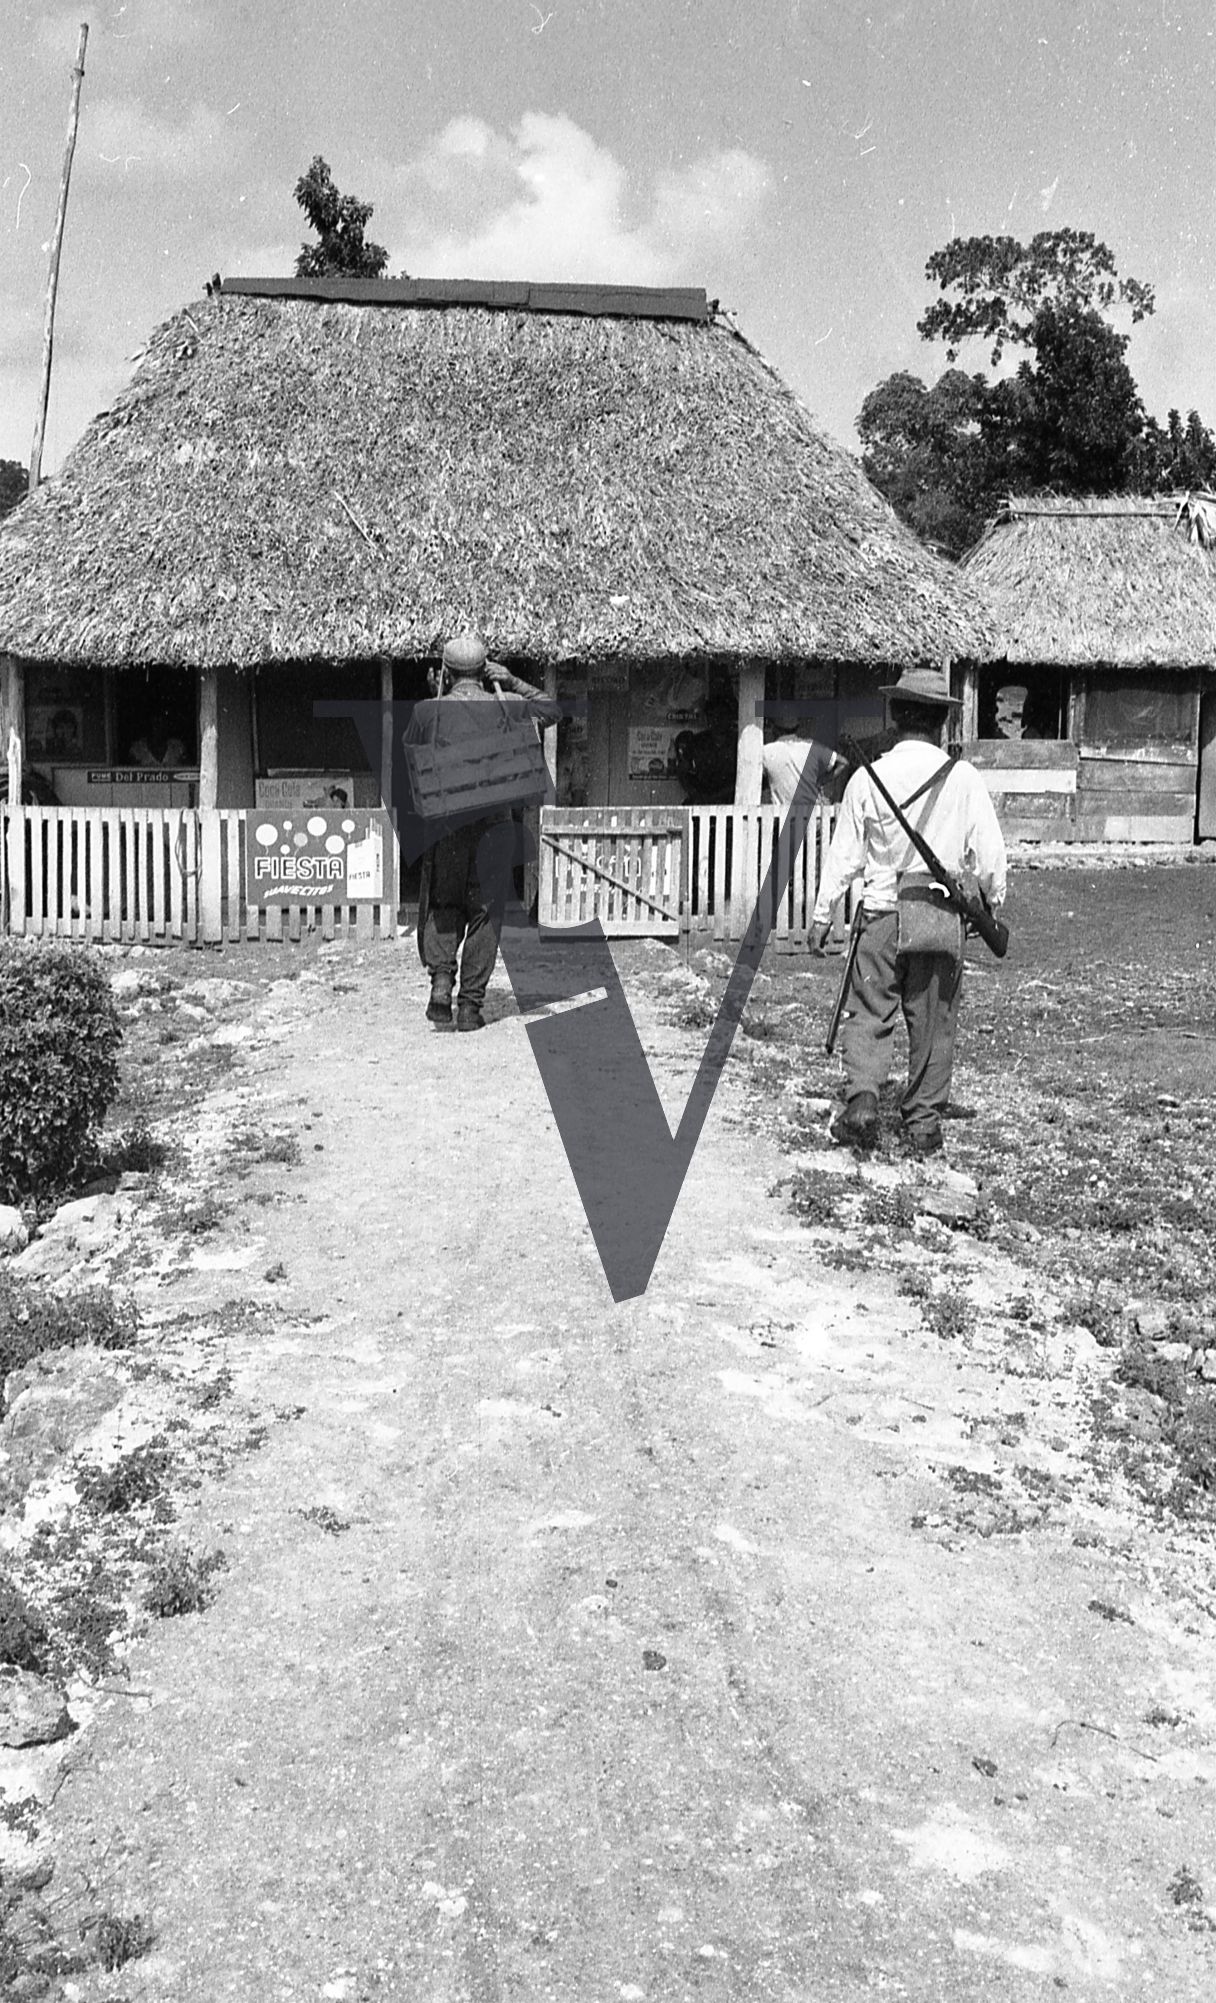 Belize, people walk towards straw shop, advertisement for FIESTA cigarettes.